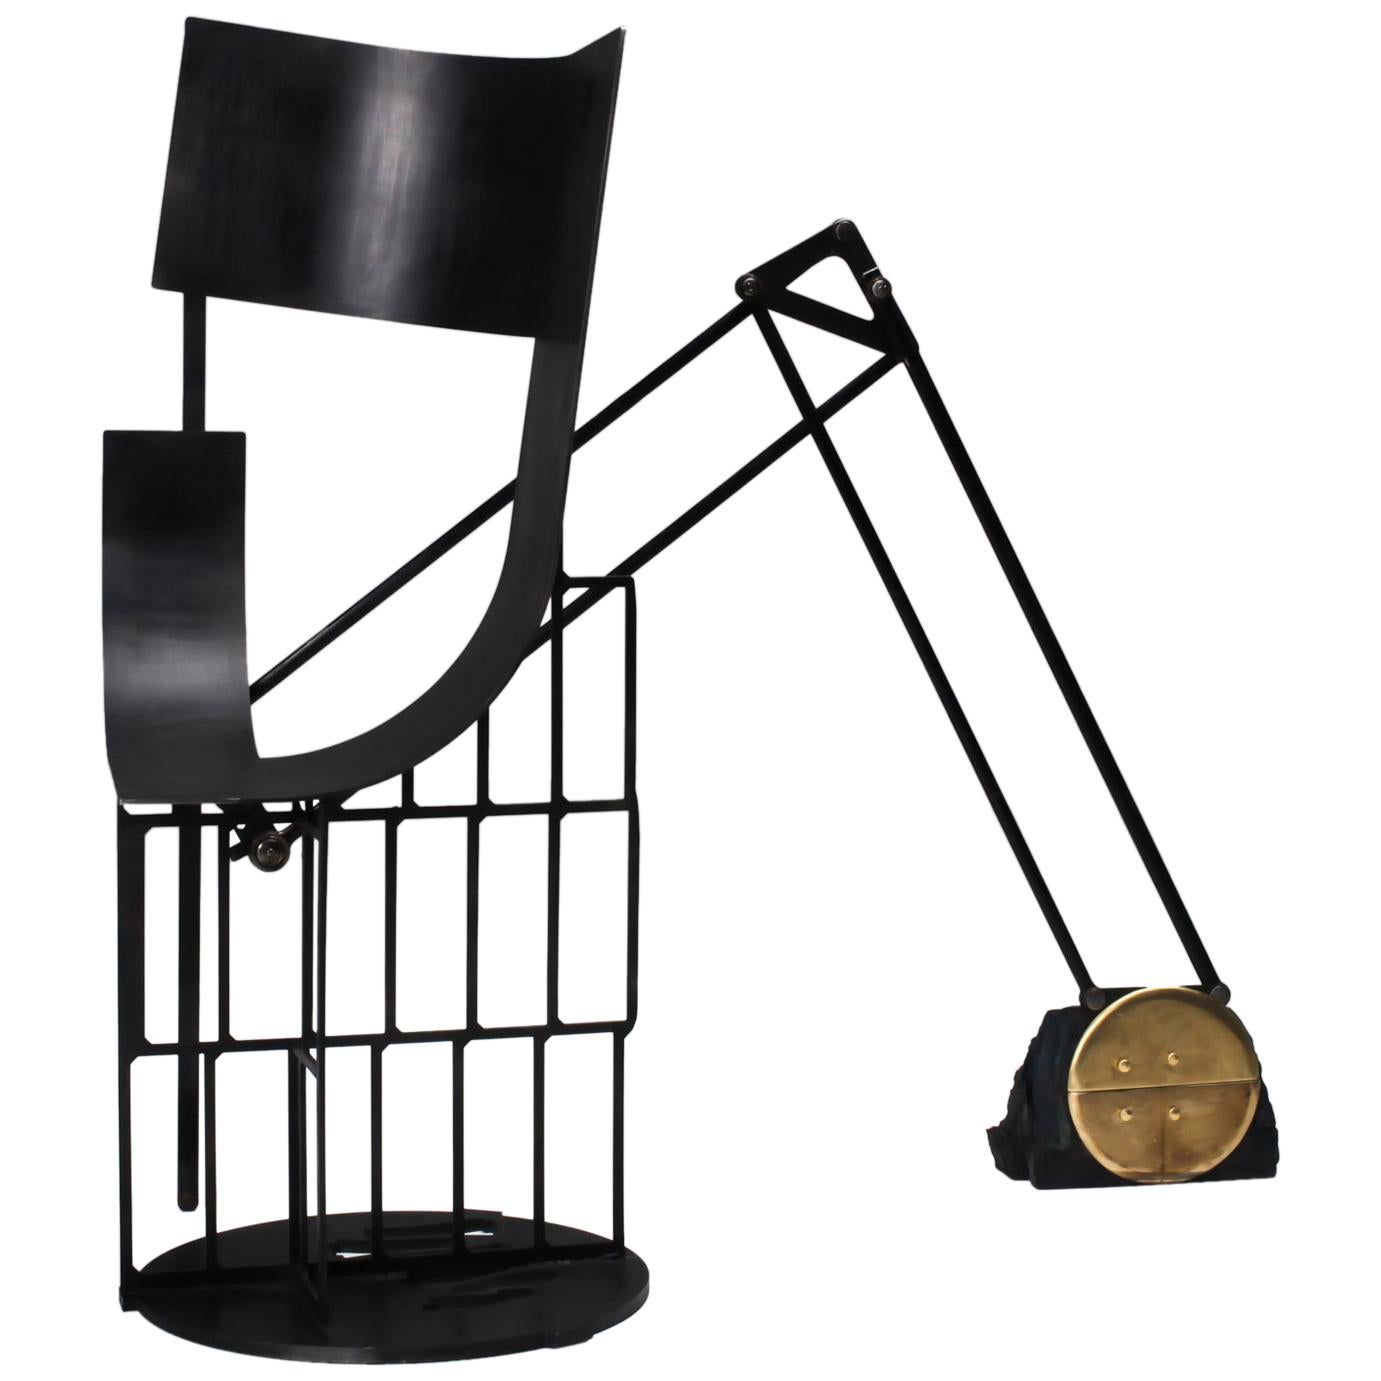 Functional art Throne / Chair "Black Caterpillar" by Lionel Jadot 2020